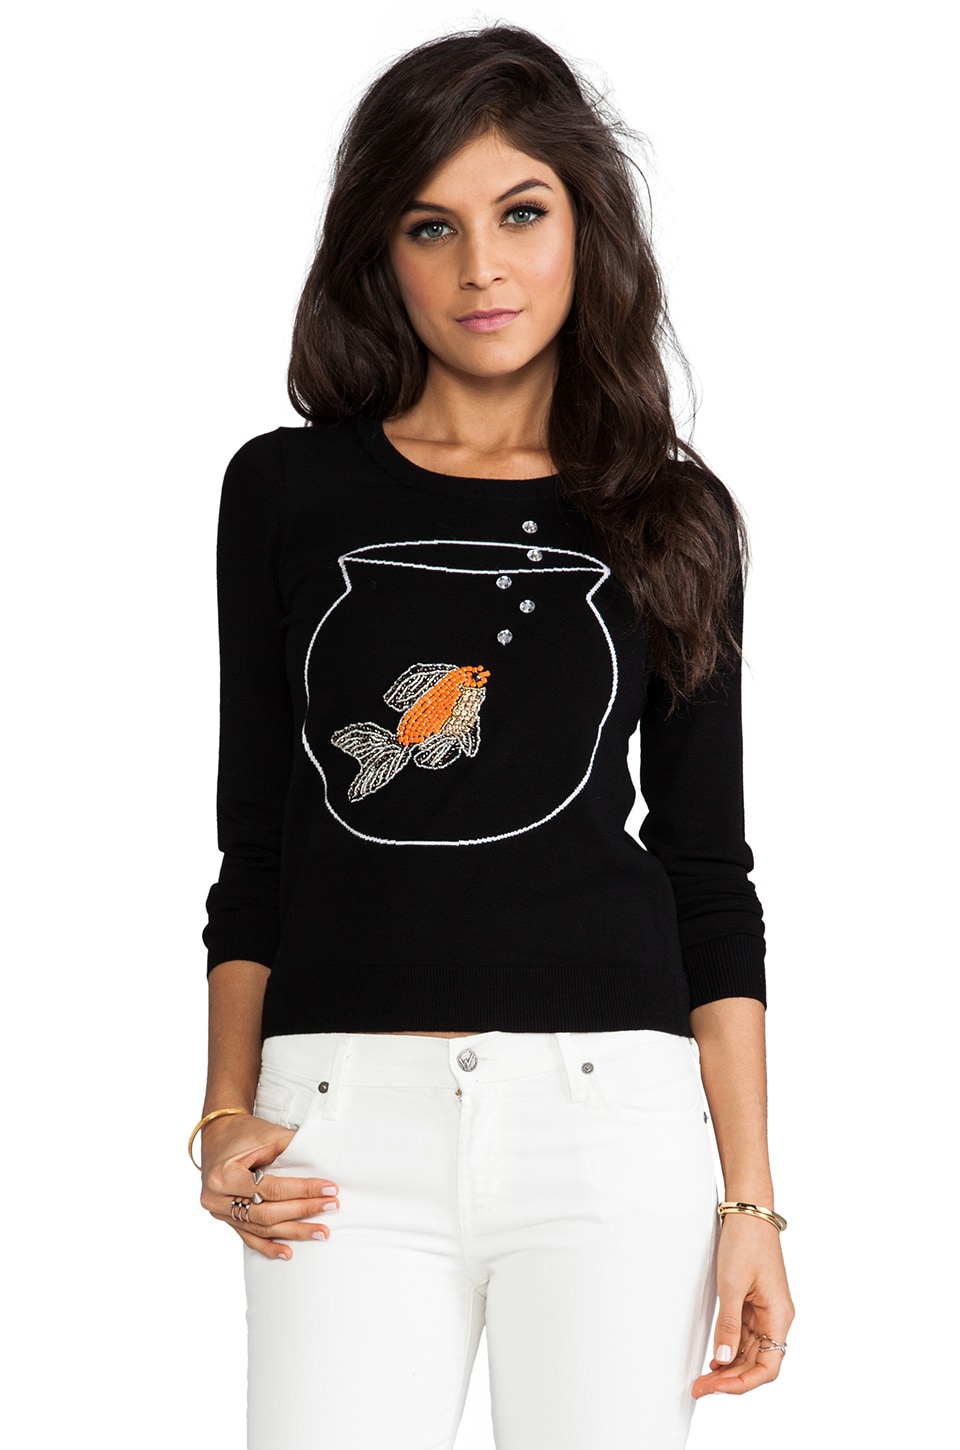 goldfish sweater